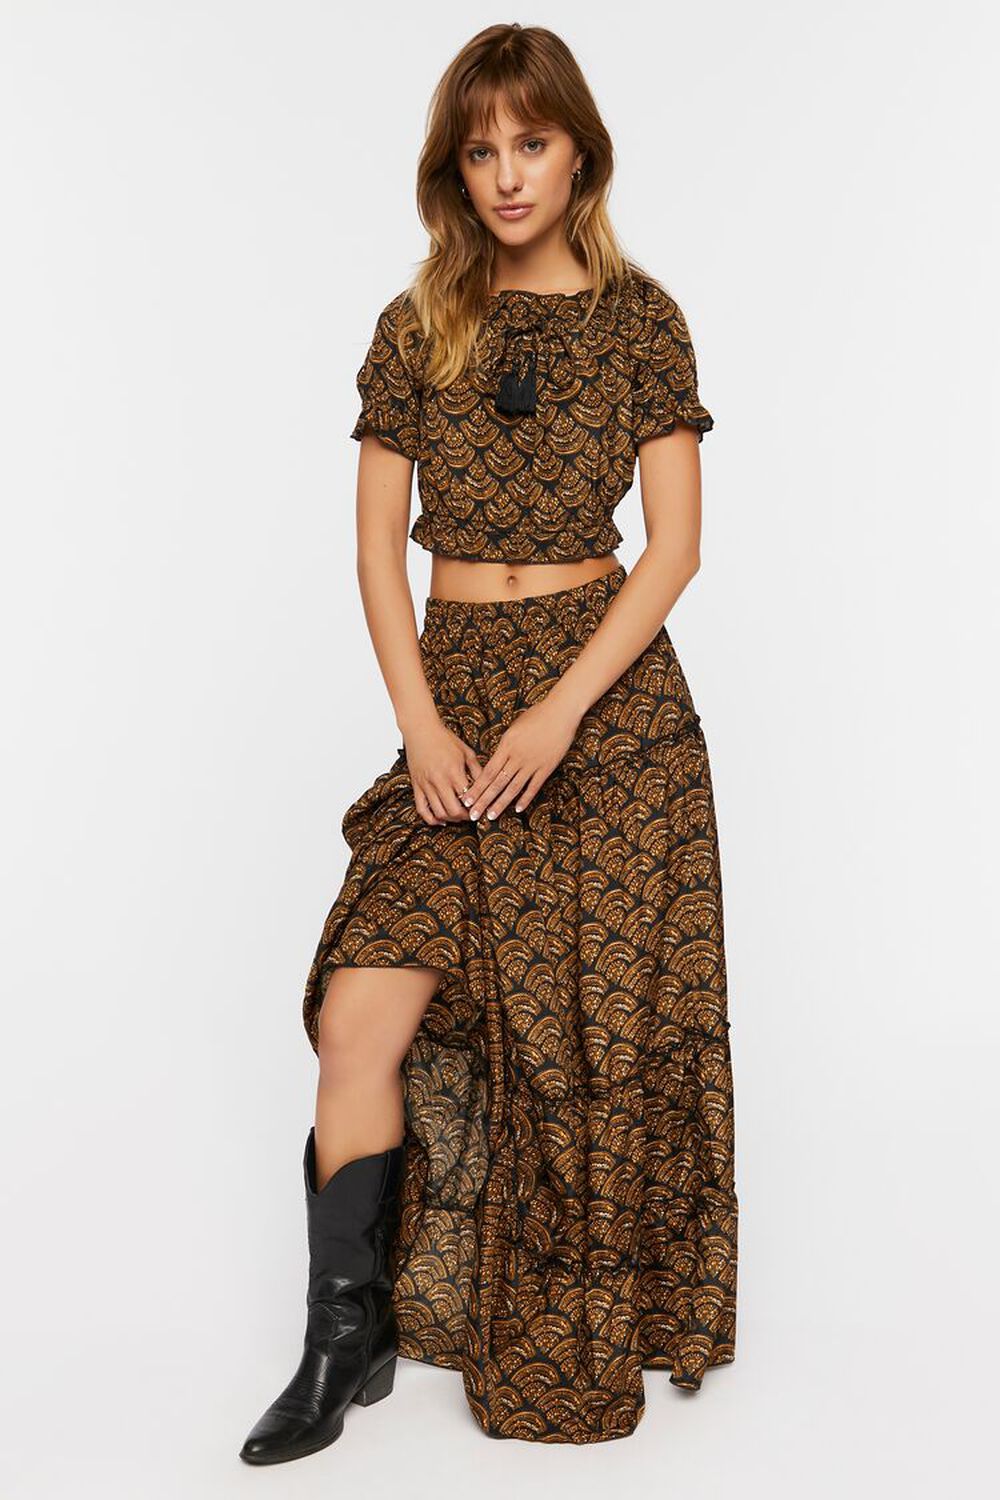 BROWN/MULTI Ornate Print Tiered Maxi Skirt, image 1